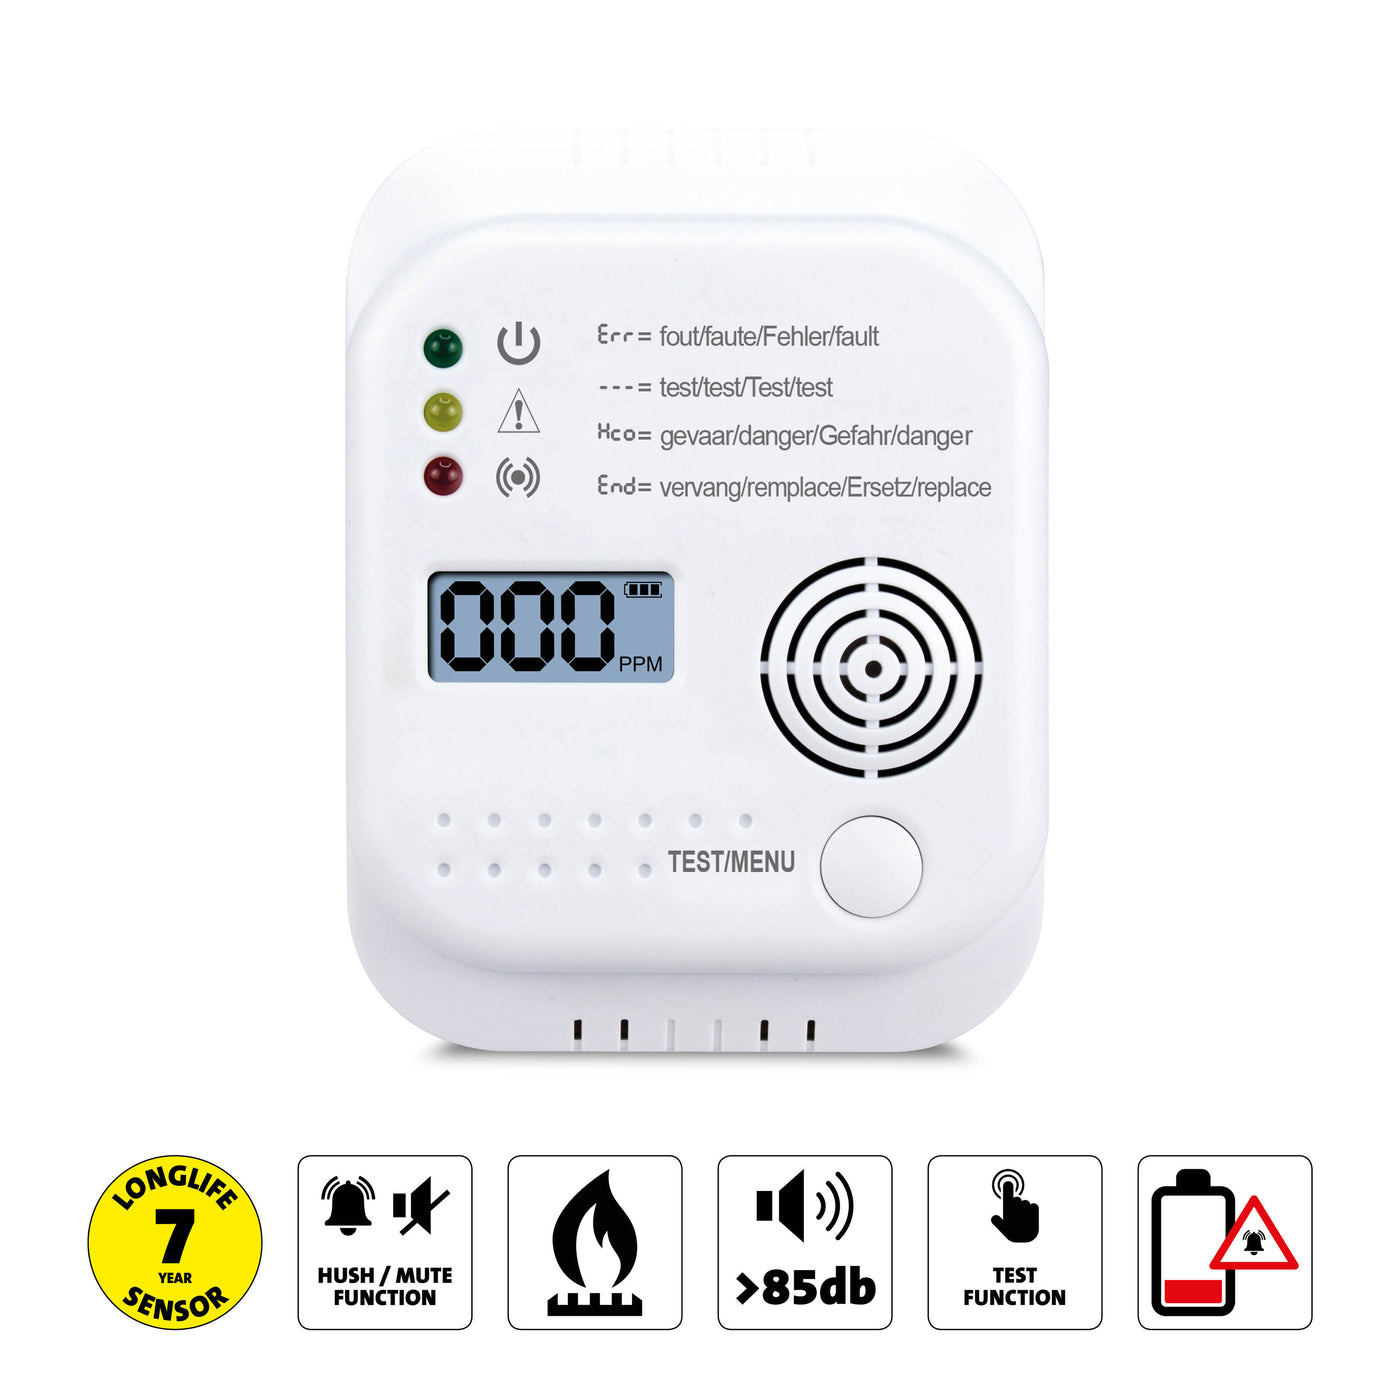 Alecto COA-28 - Carbon monoxide alarm with 7 year sensor runtime, white